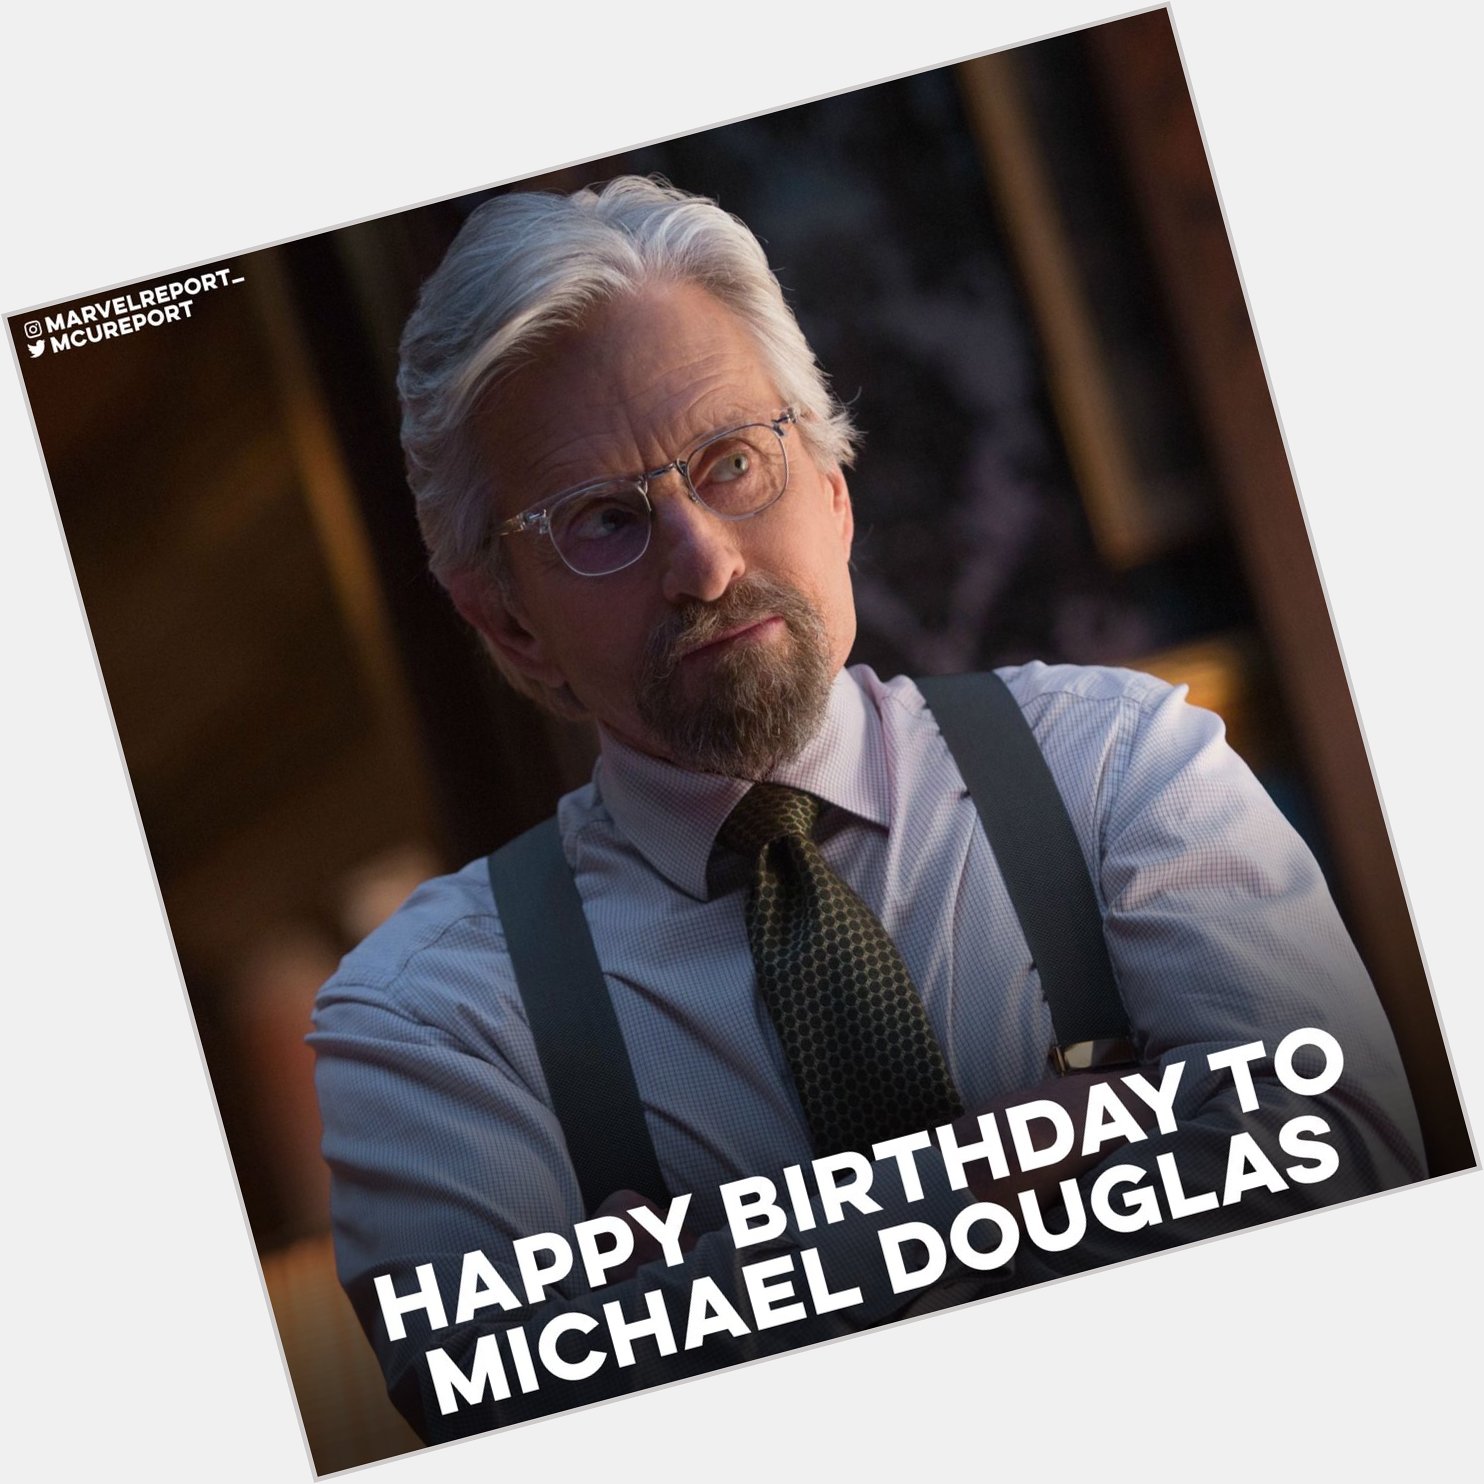 Happy Birthday to Michael Douglas who turns 77 today 